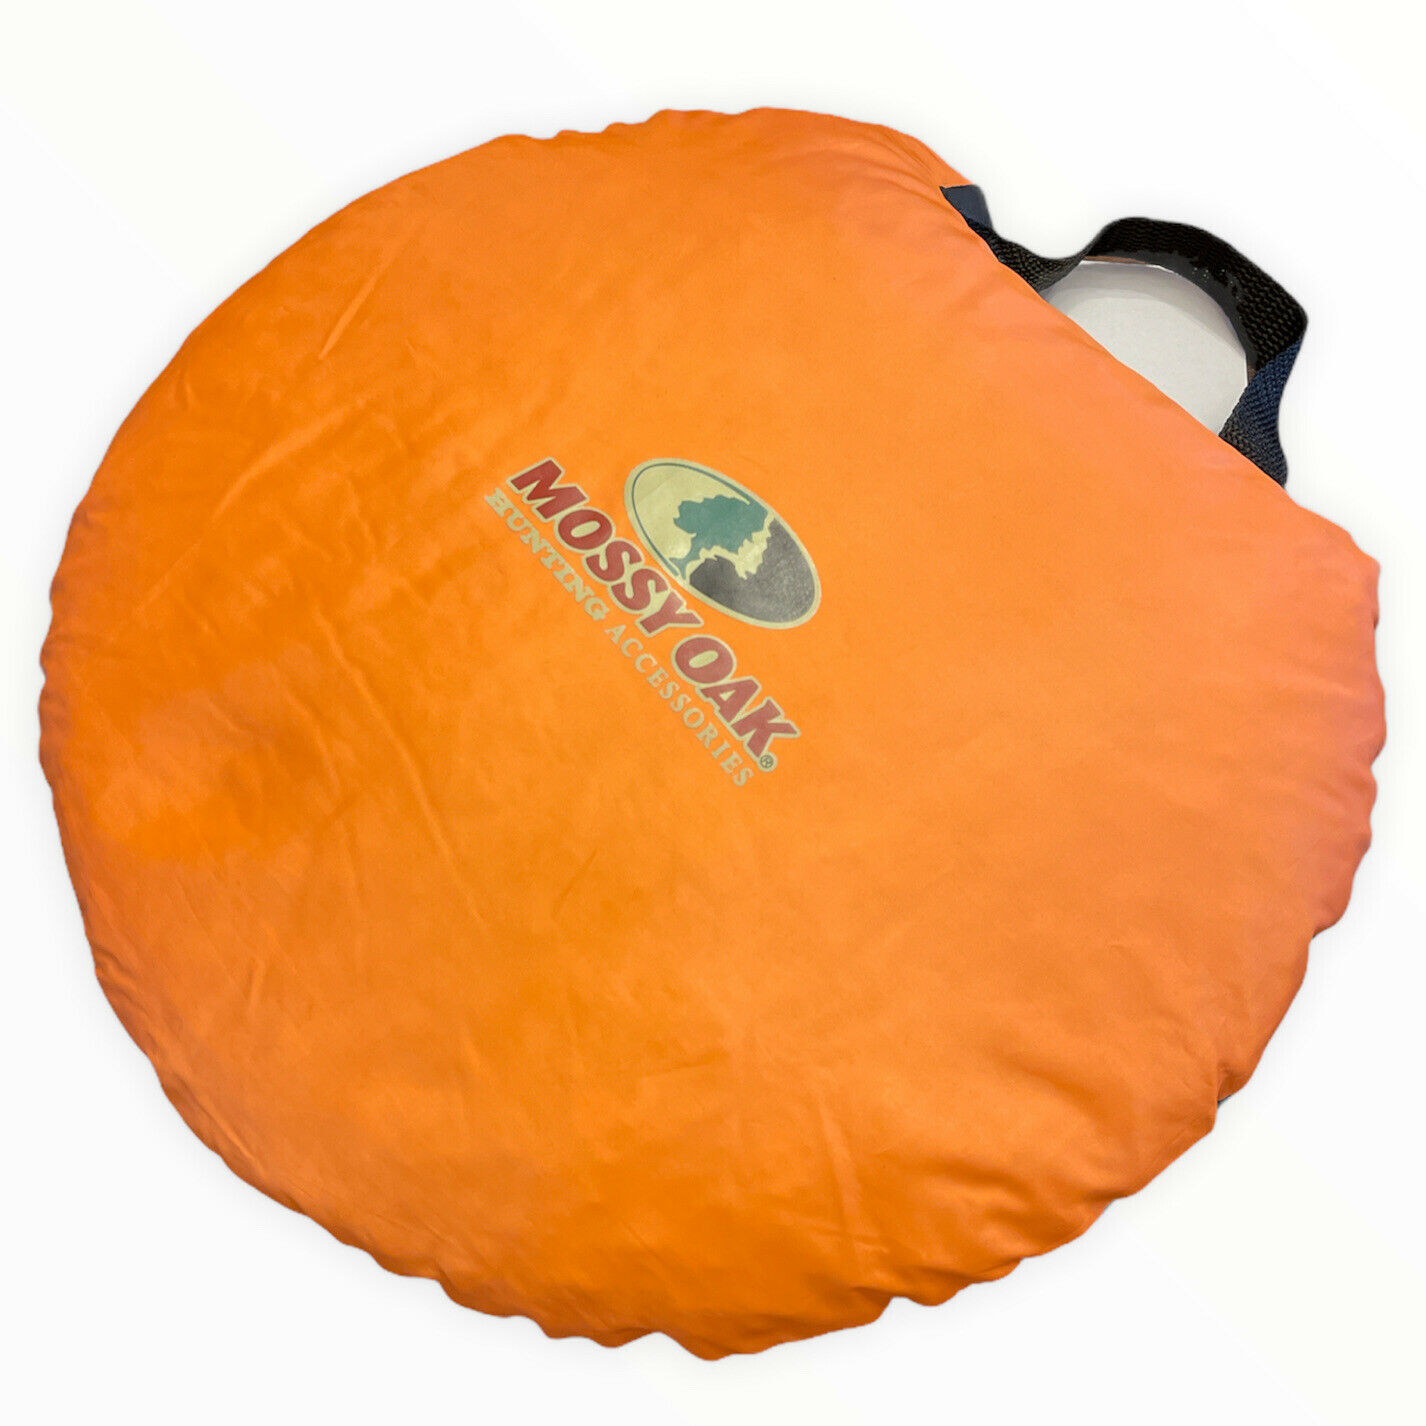 Mossy Oak Hunting Heat Seat Insulated Cushion - Reversible Blaze Orange / Black